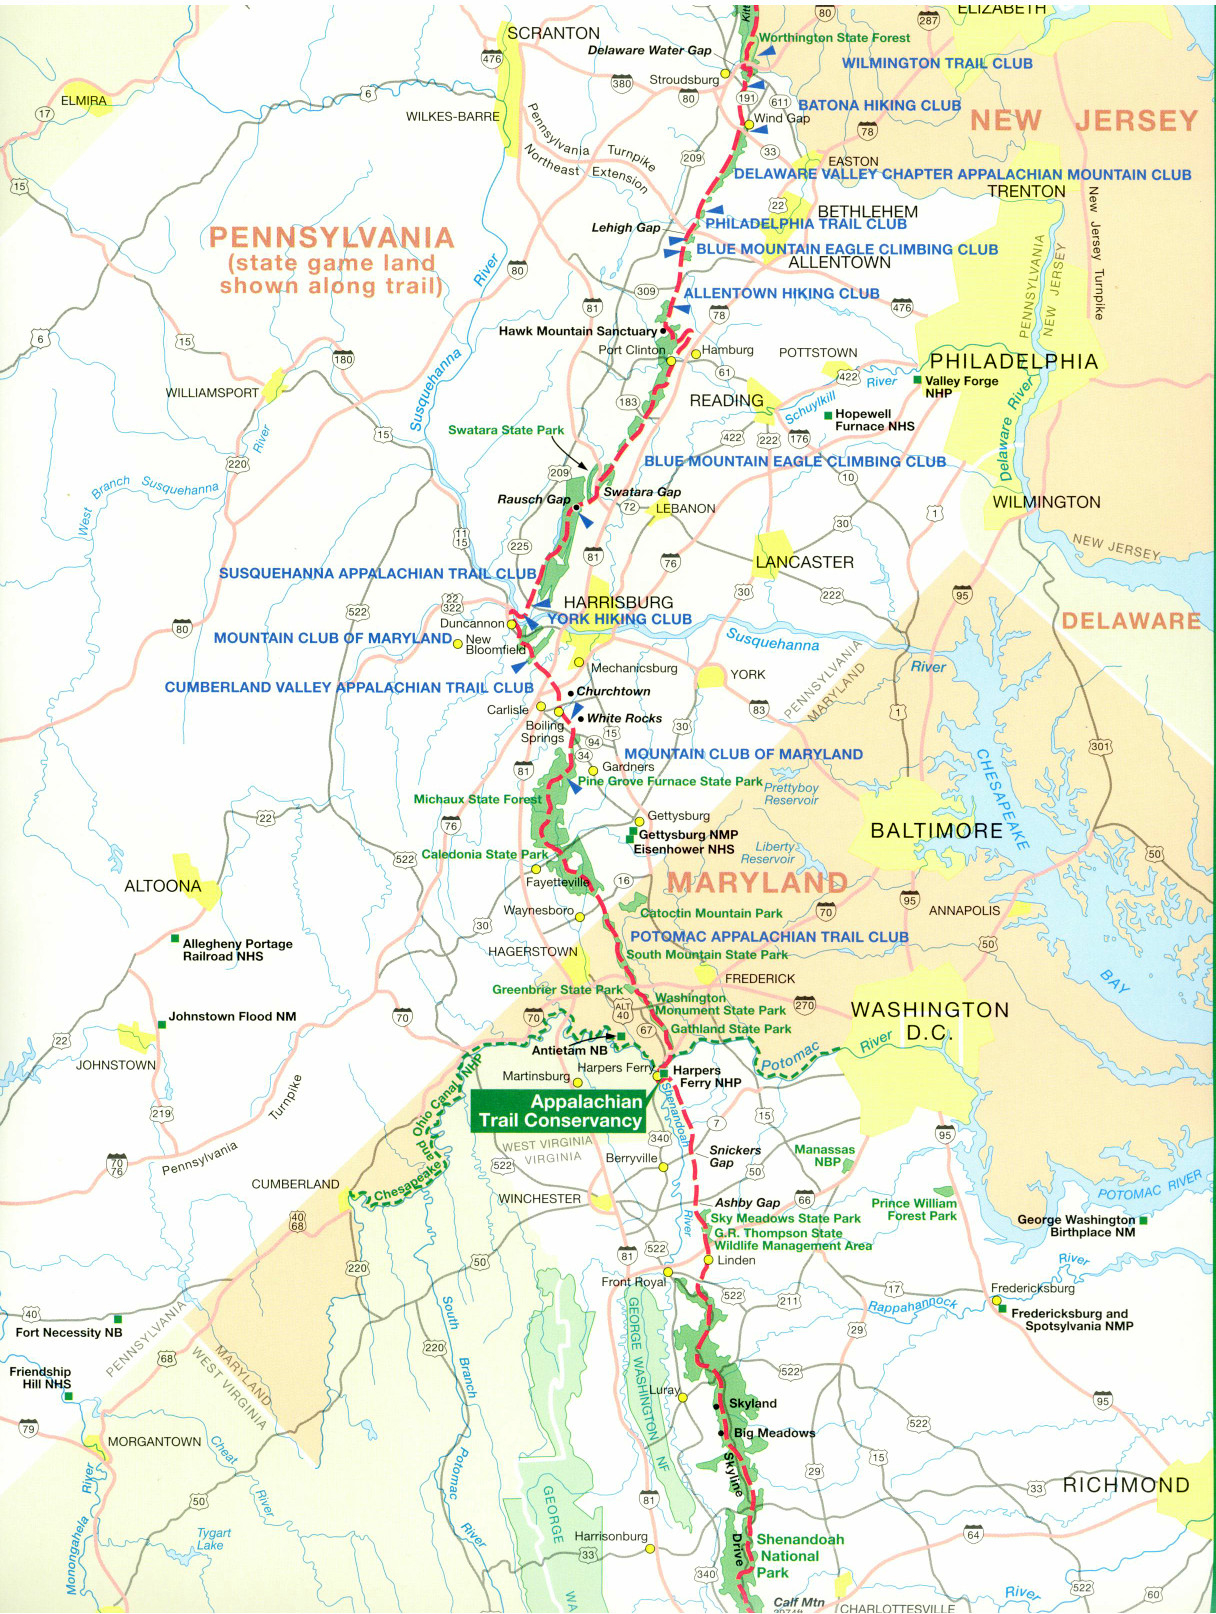 Official Appalachian Trail Maps - Printable Hiking Maps